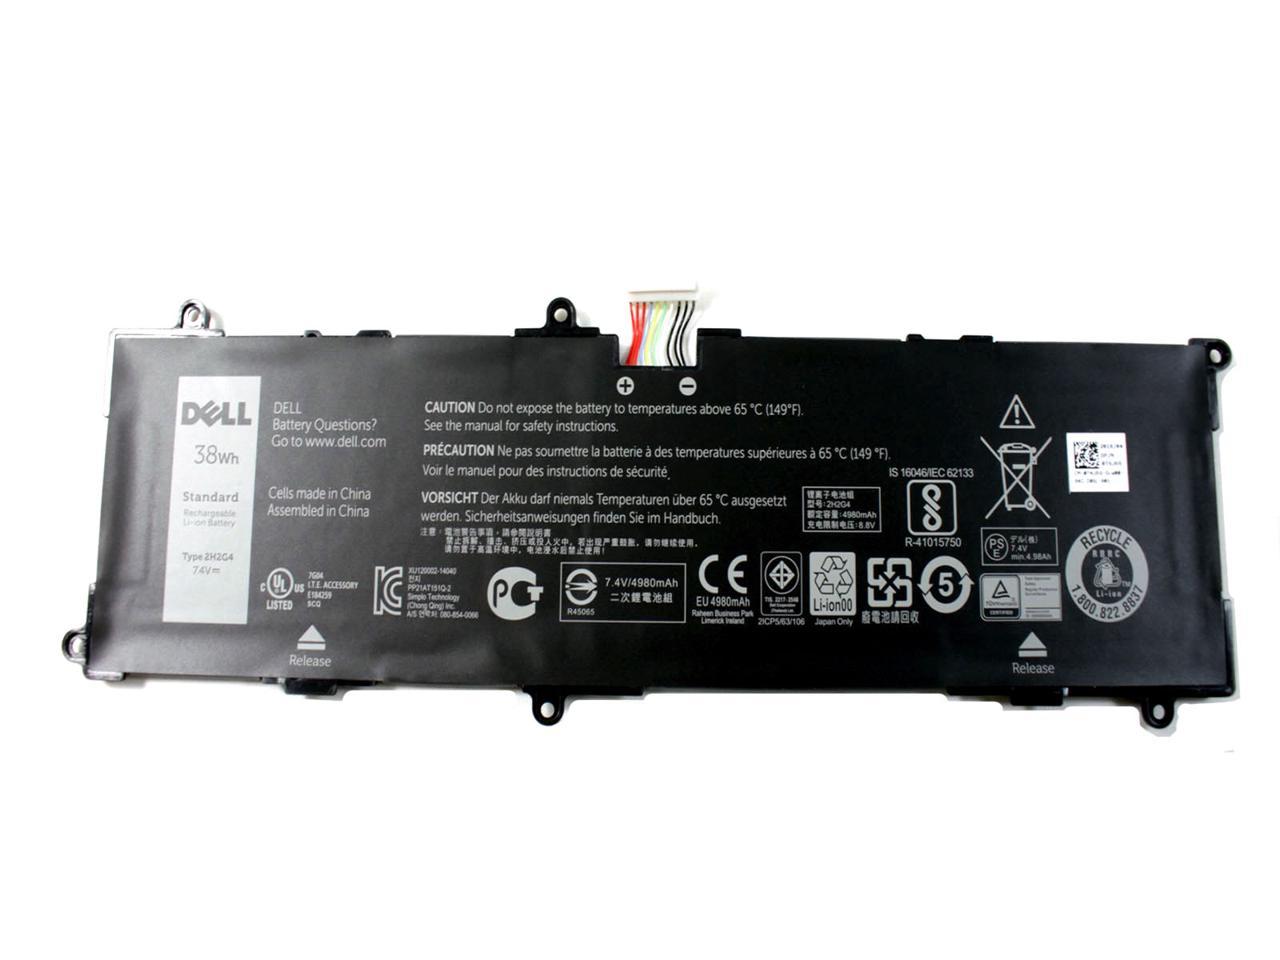 Dell Venue 11 Pro 7140 Tablet Series 7 4v 38whr 2 Cell Li Ion Battery 2h2g4 Hfrc3 Txj69 0txj69 Newegg Com